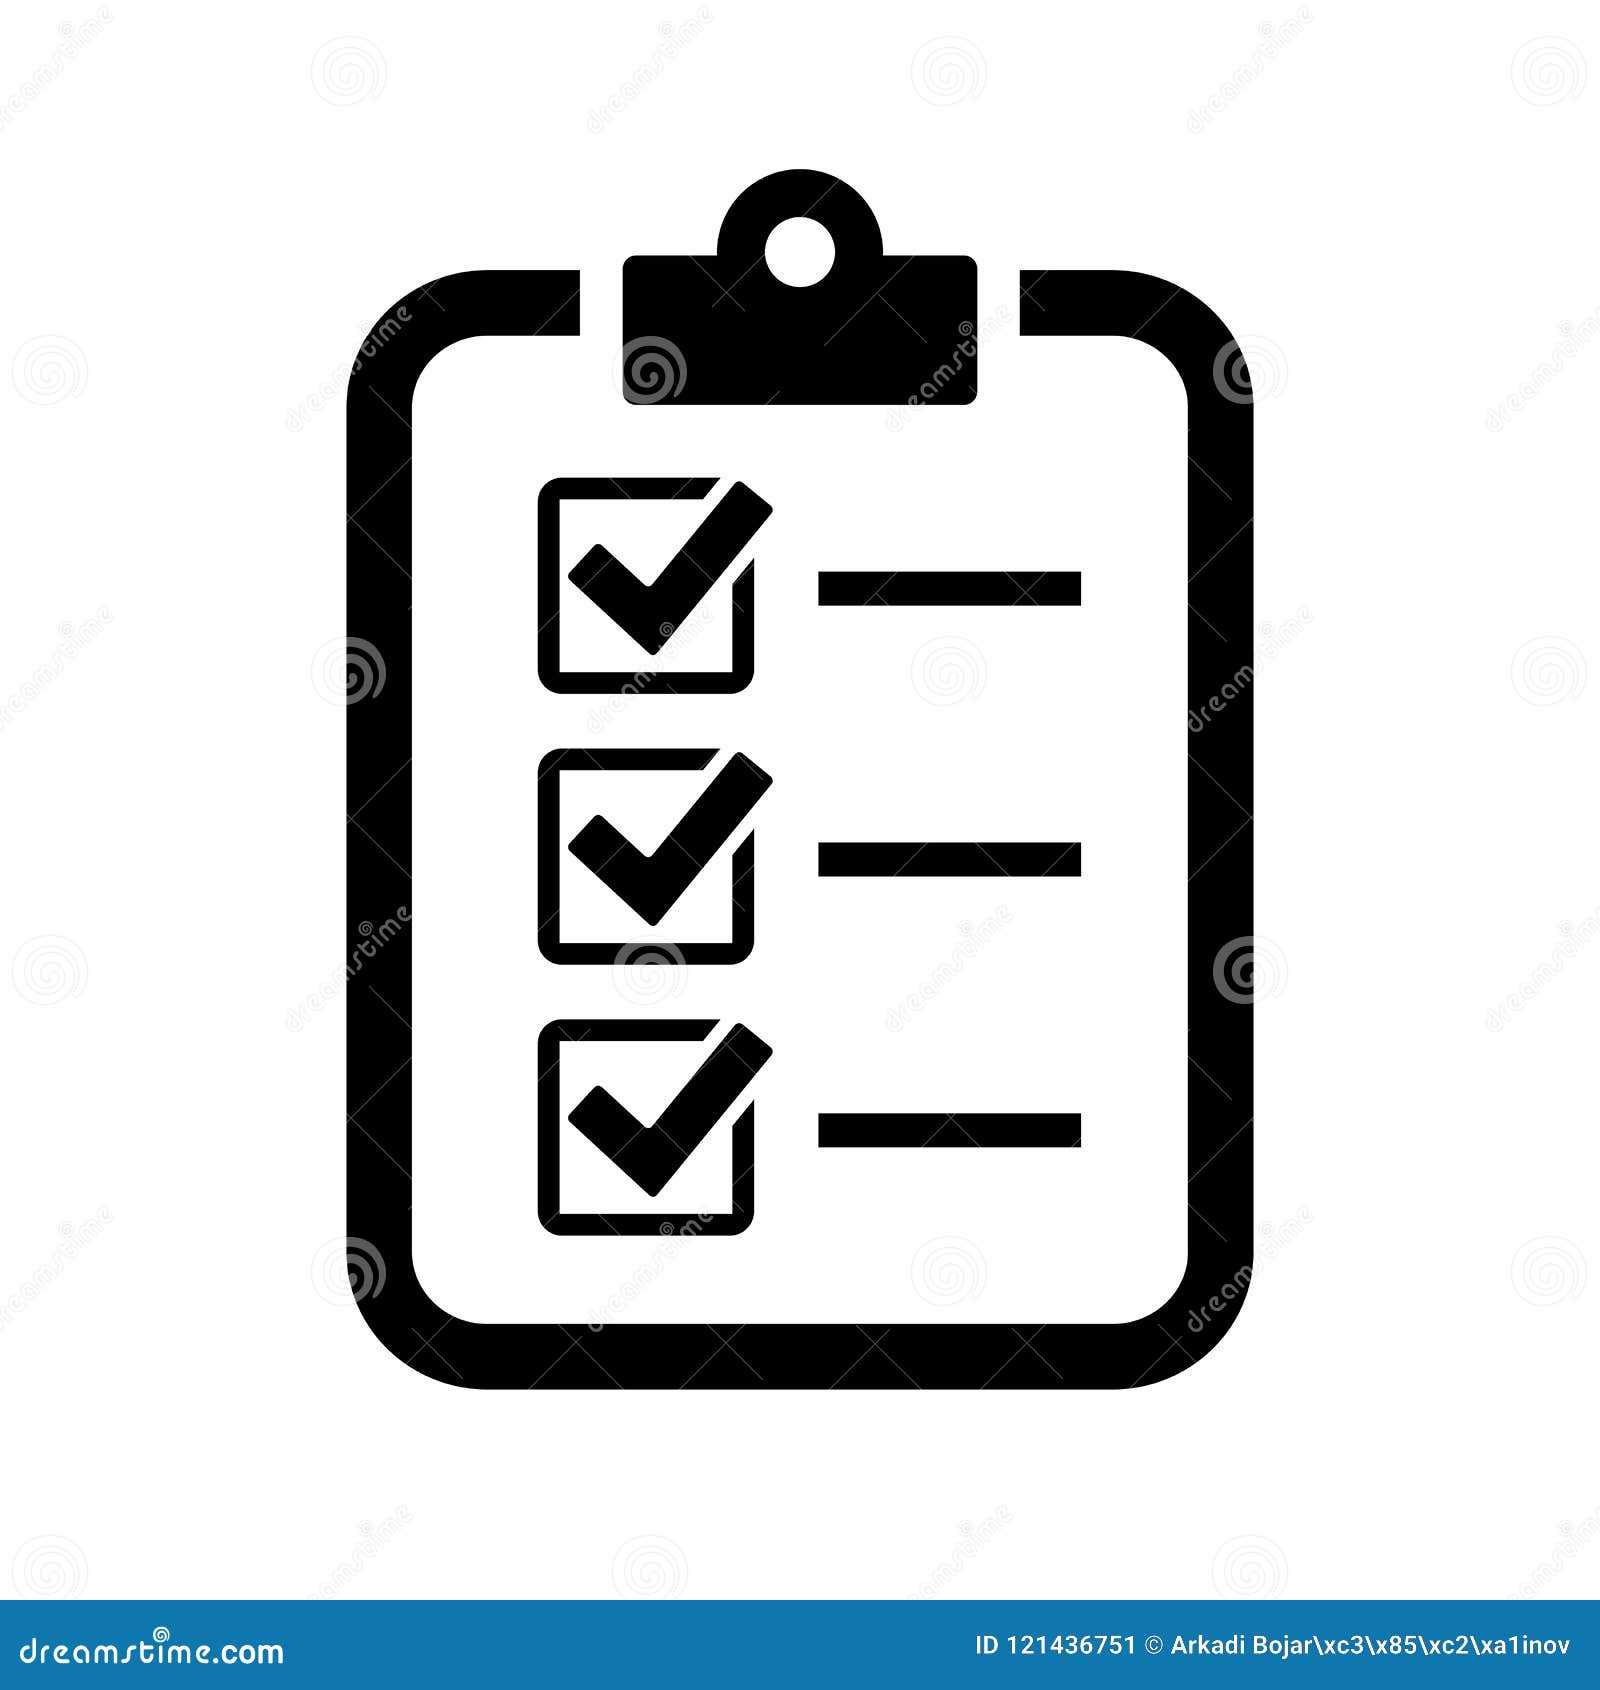 checklist  icon